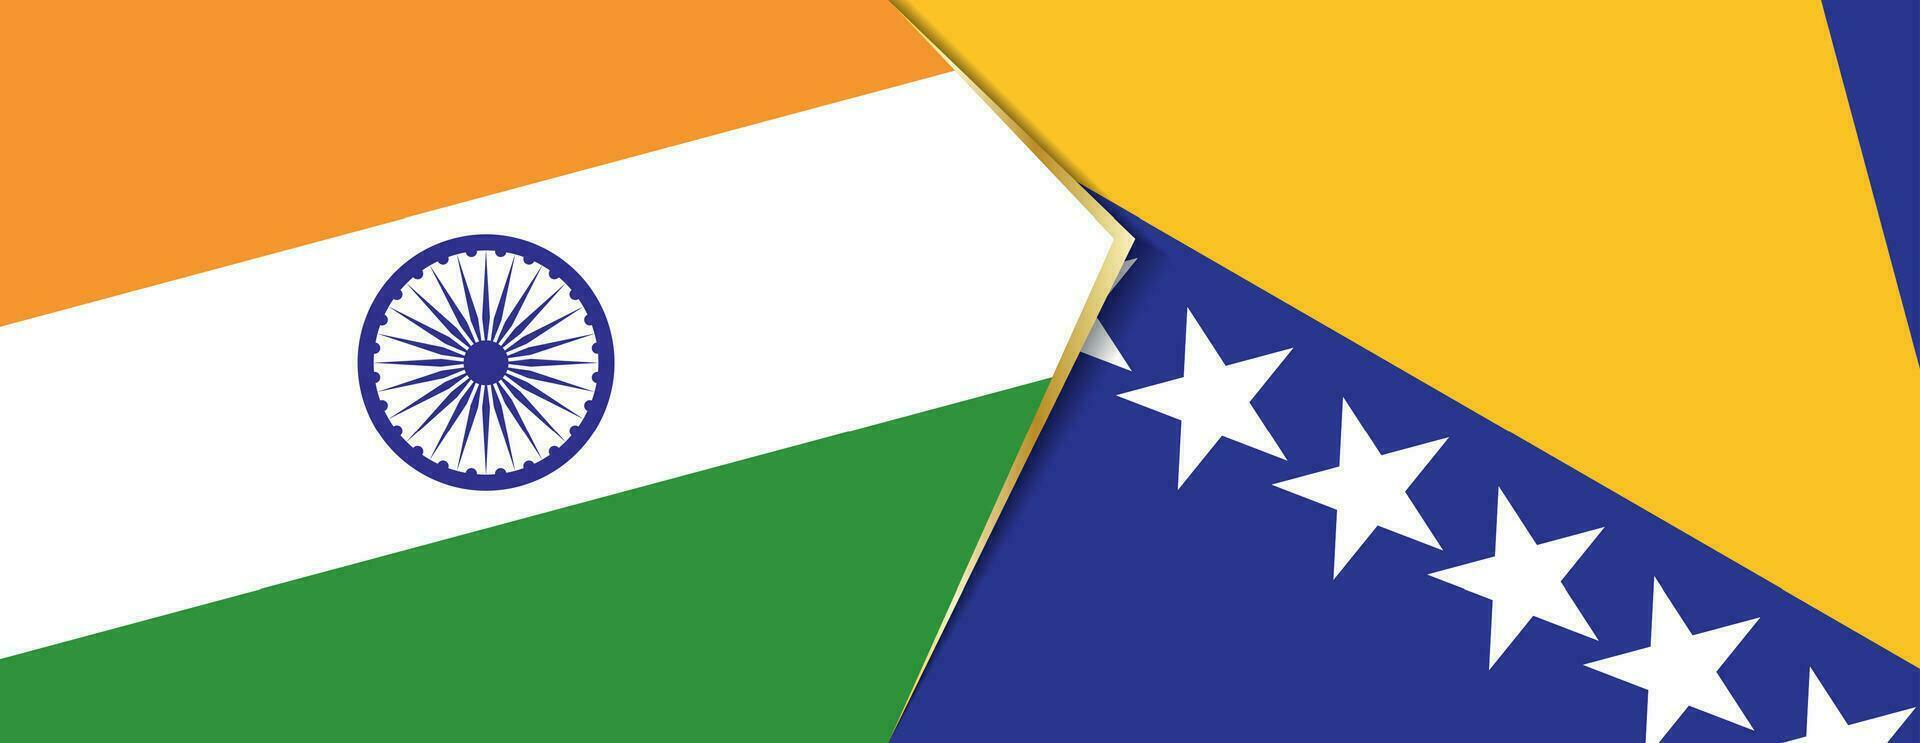 Índia e Bósnia e herzegovina bandeiras, dois vetor bandeiras.